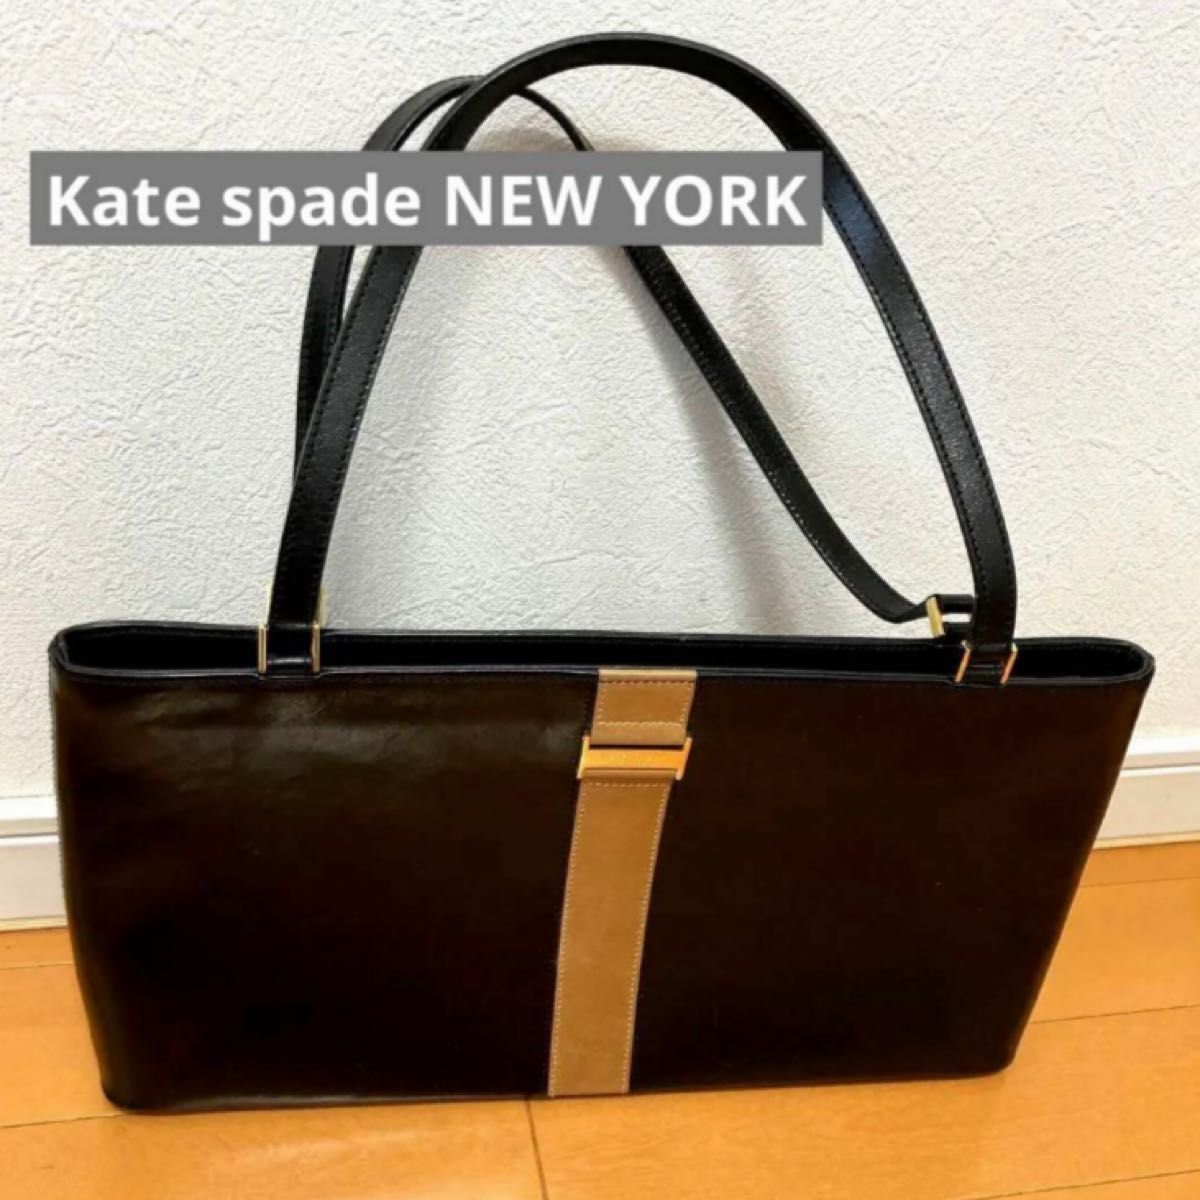 Kate spade NEW YORK ハンドバッグ